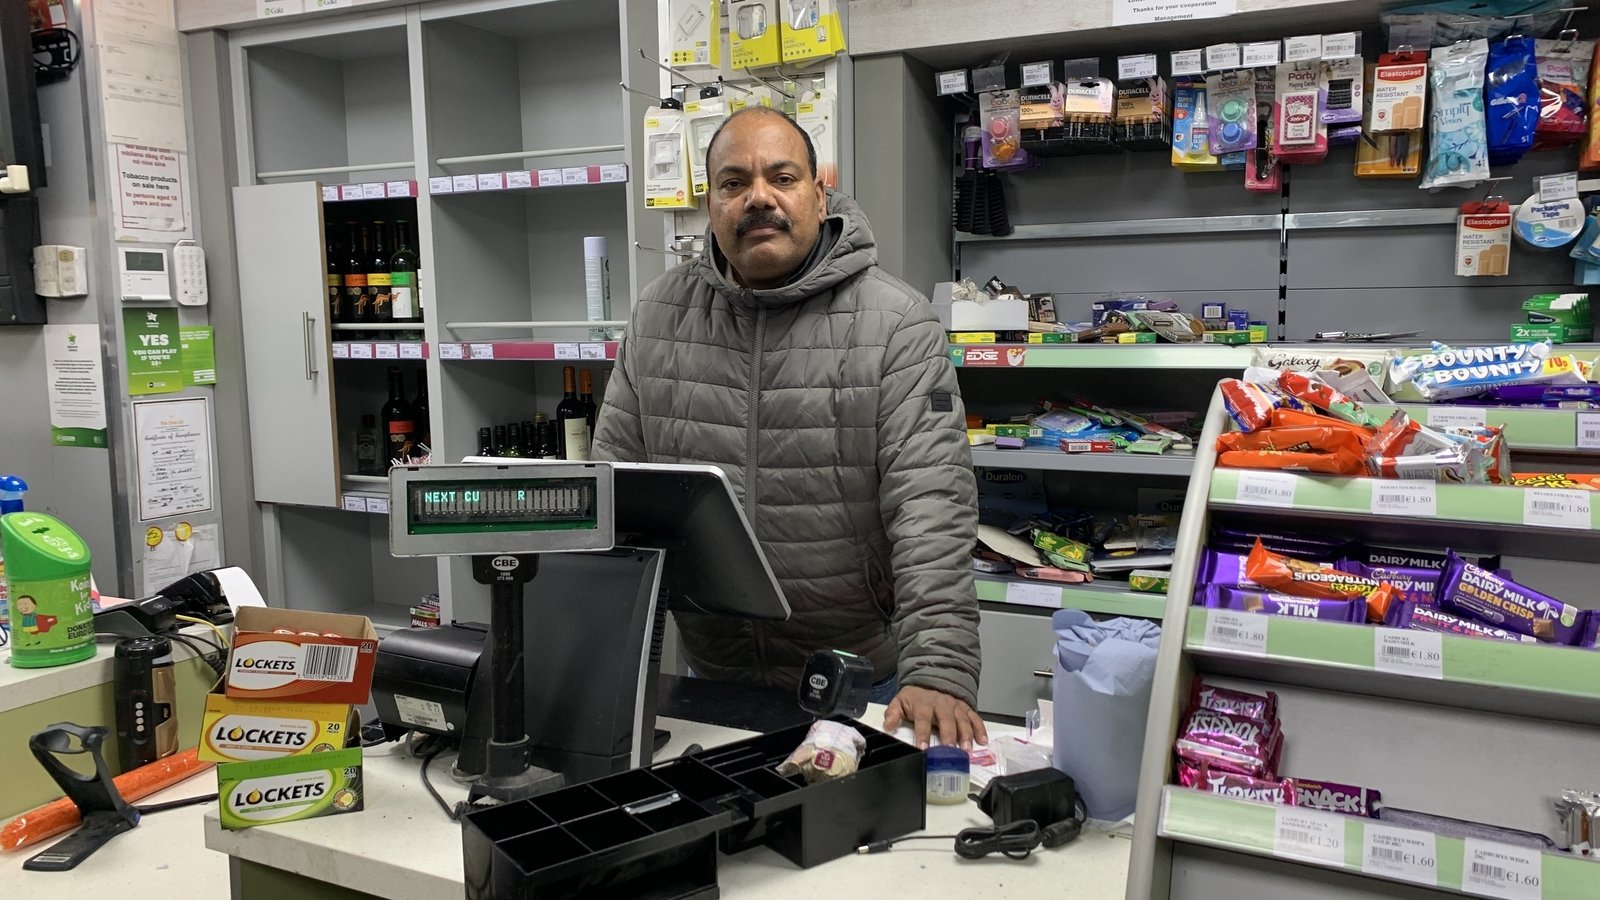 Dublin shop owner recalls looting as premises ransacked